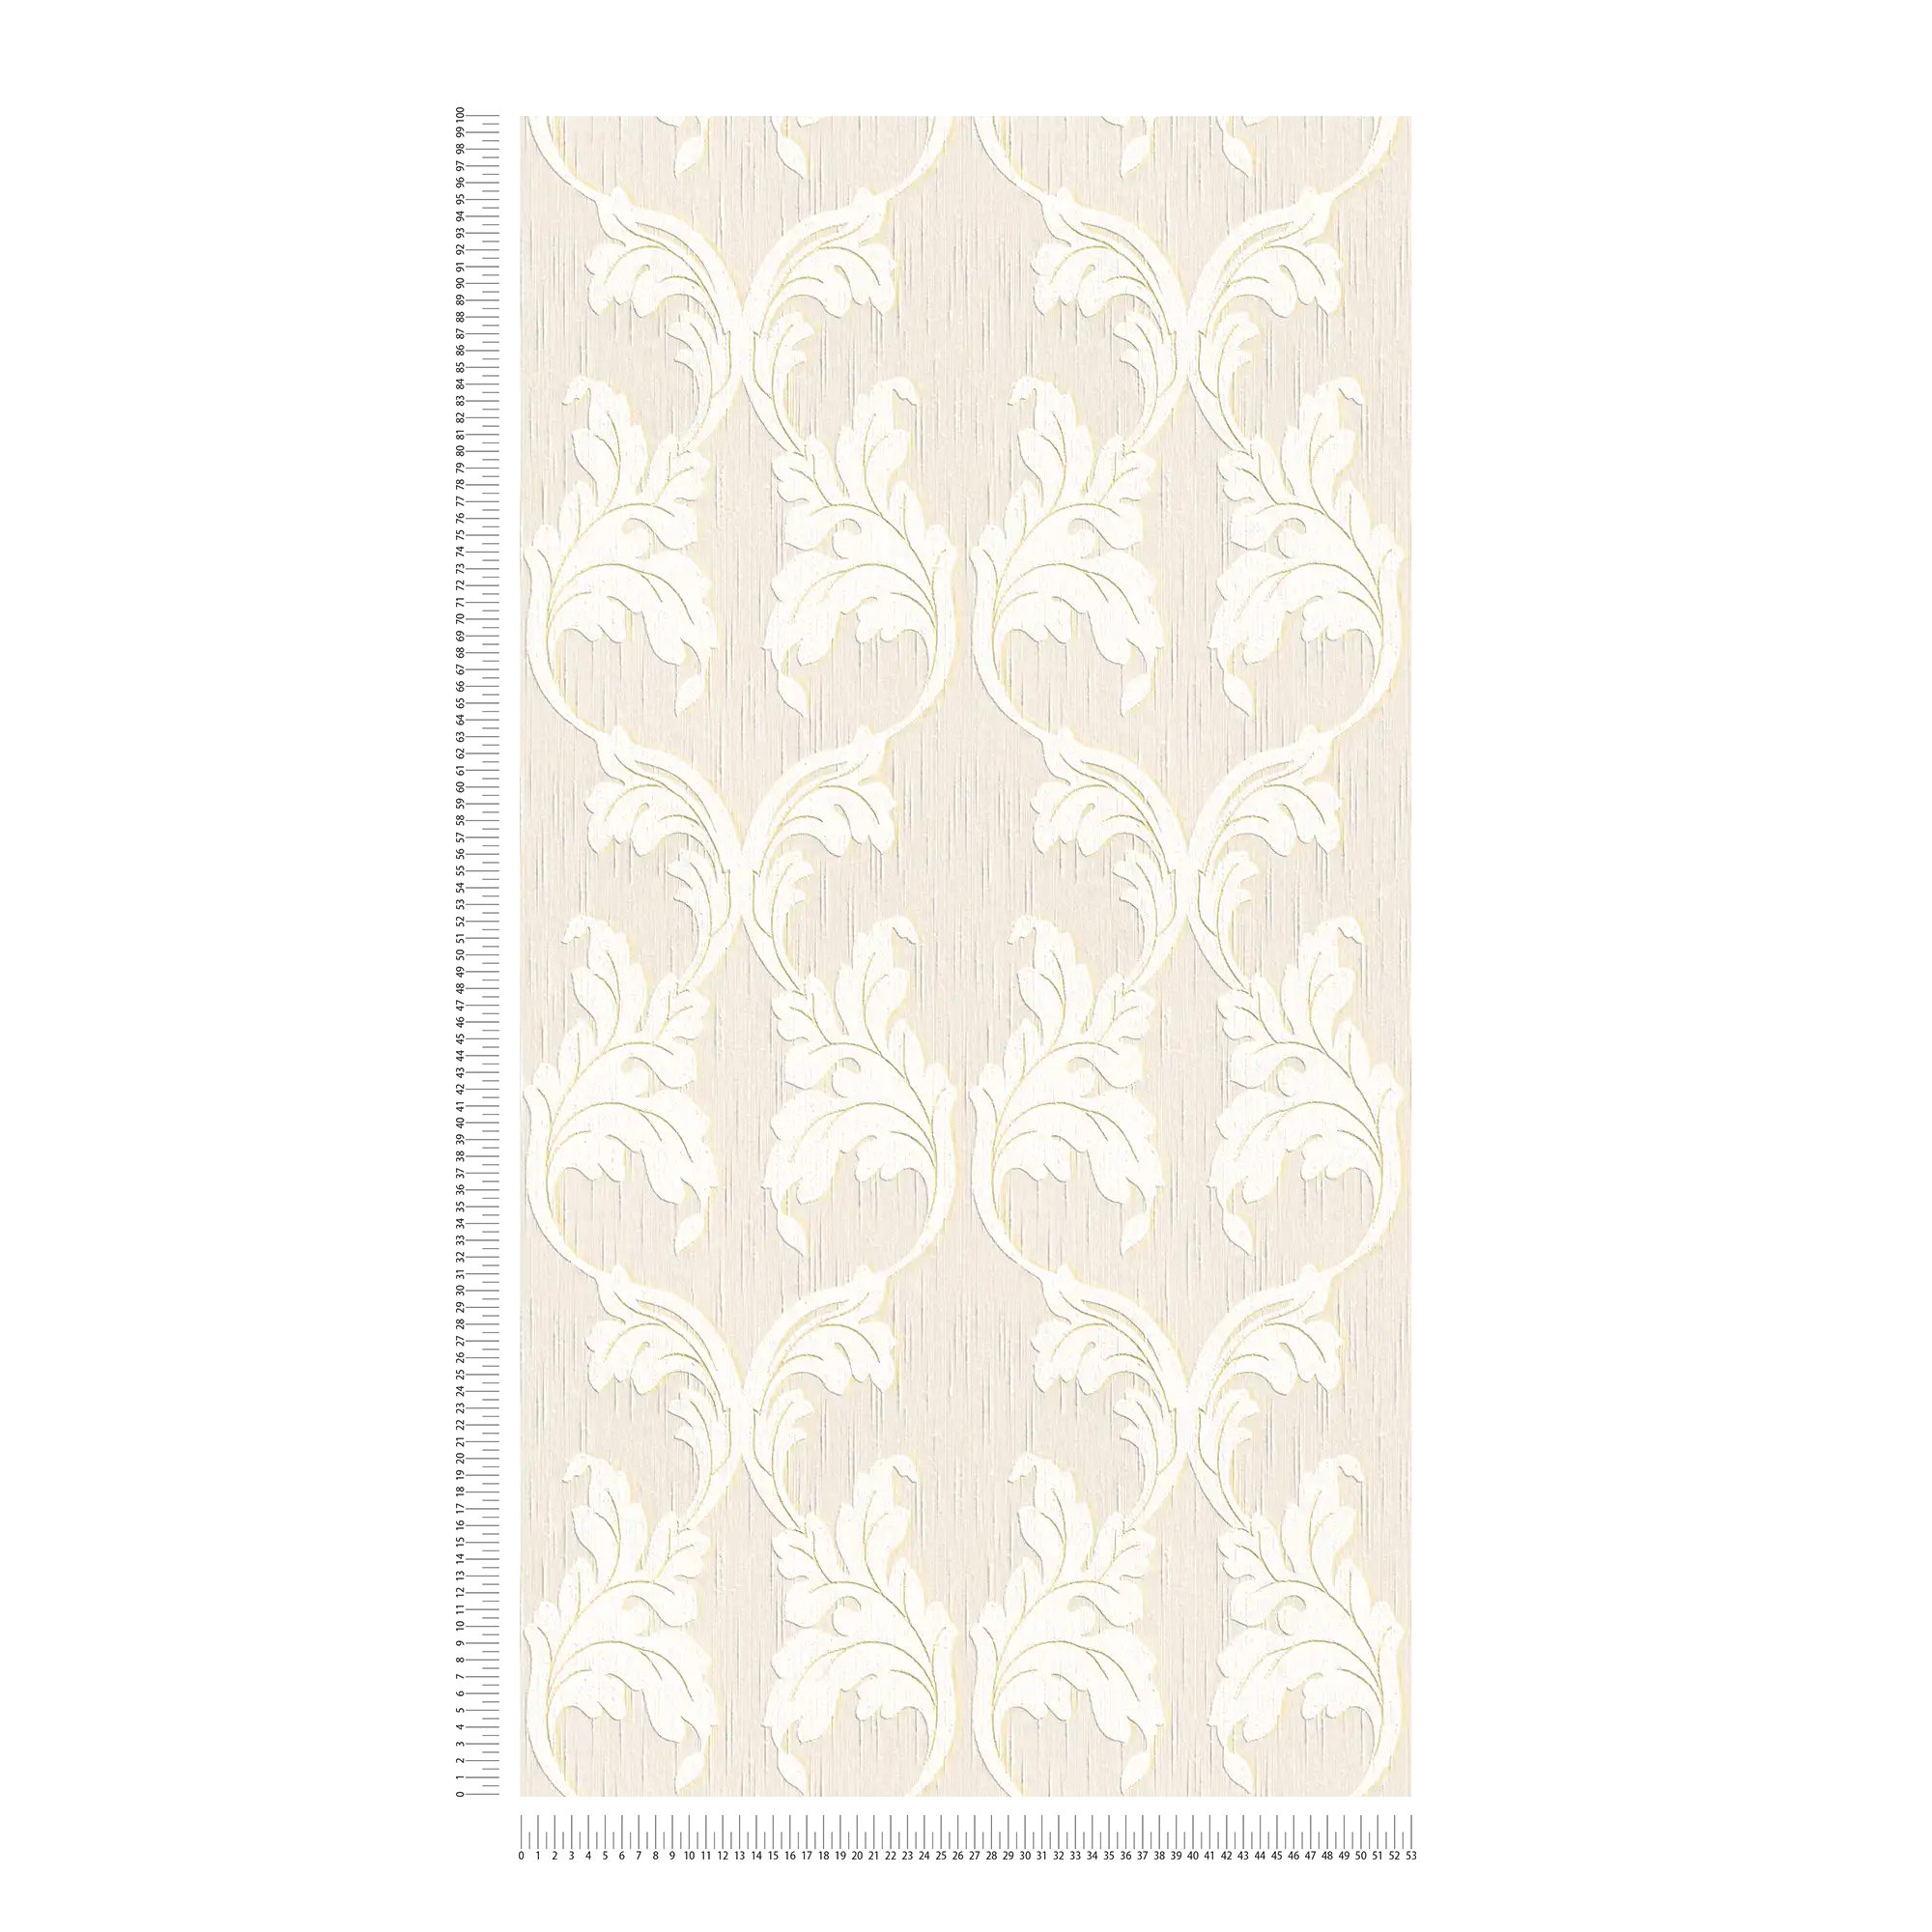             Premium textile wallpaper with ornament vines - beige, cream, gold
        